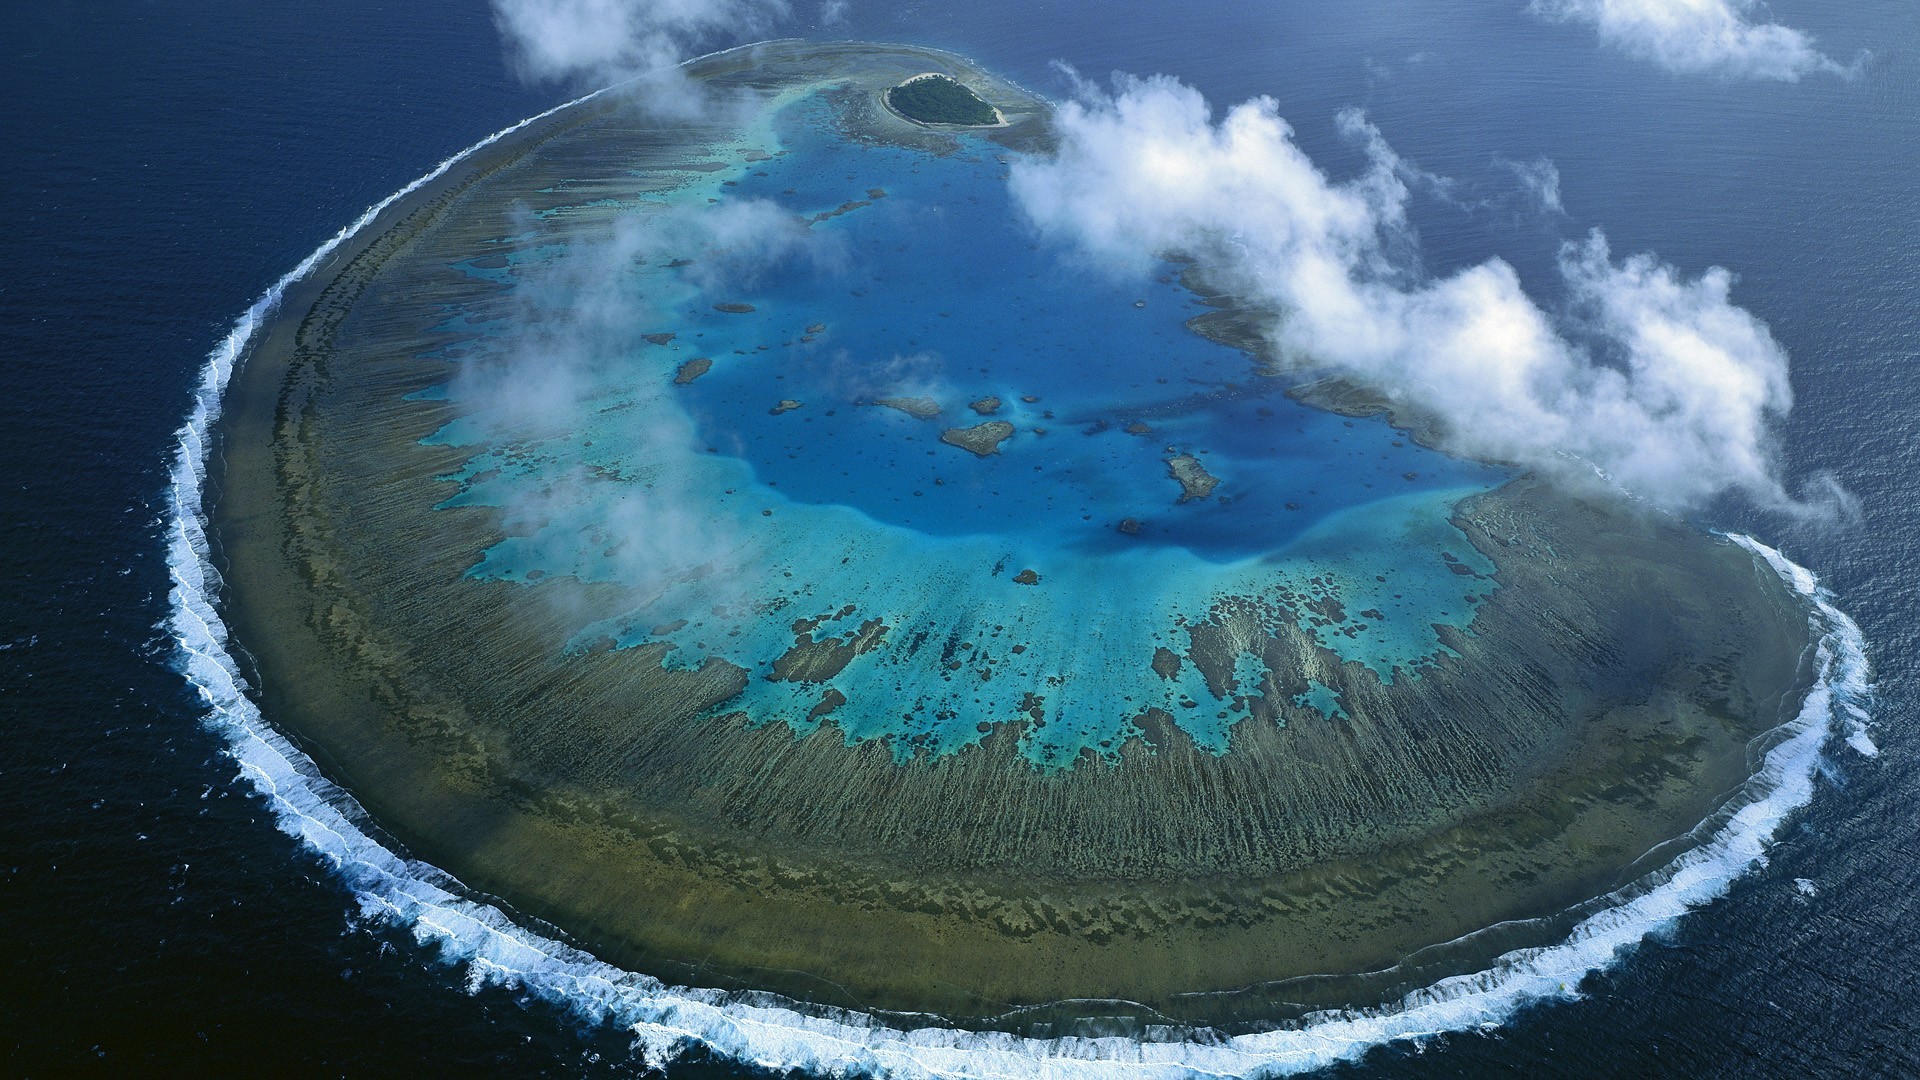 General 1920x1080 Australia island water sea clouds landscape deserted Island nature green lagoon atols